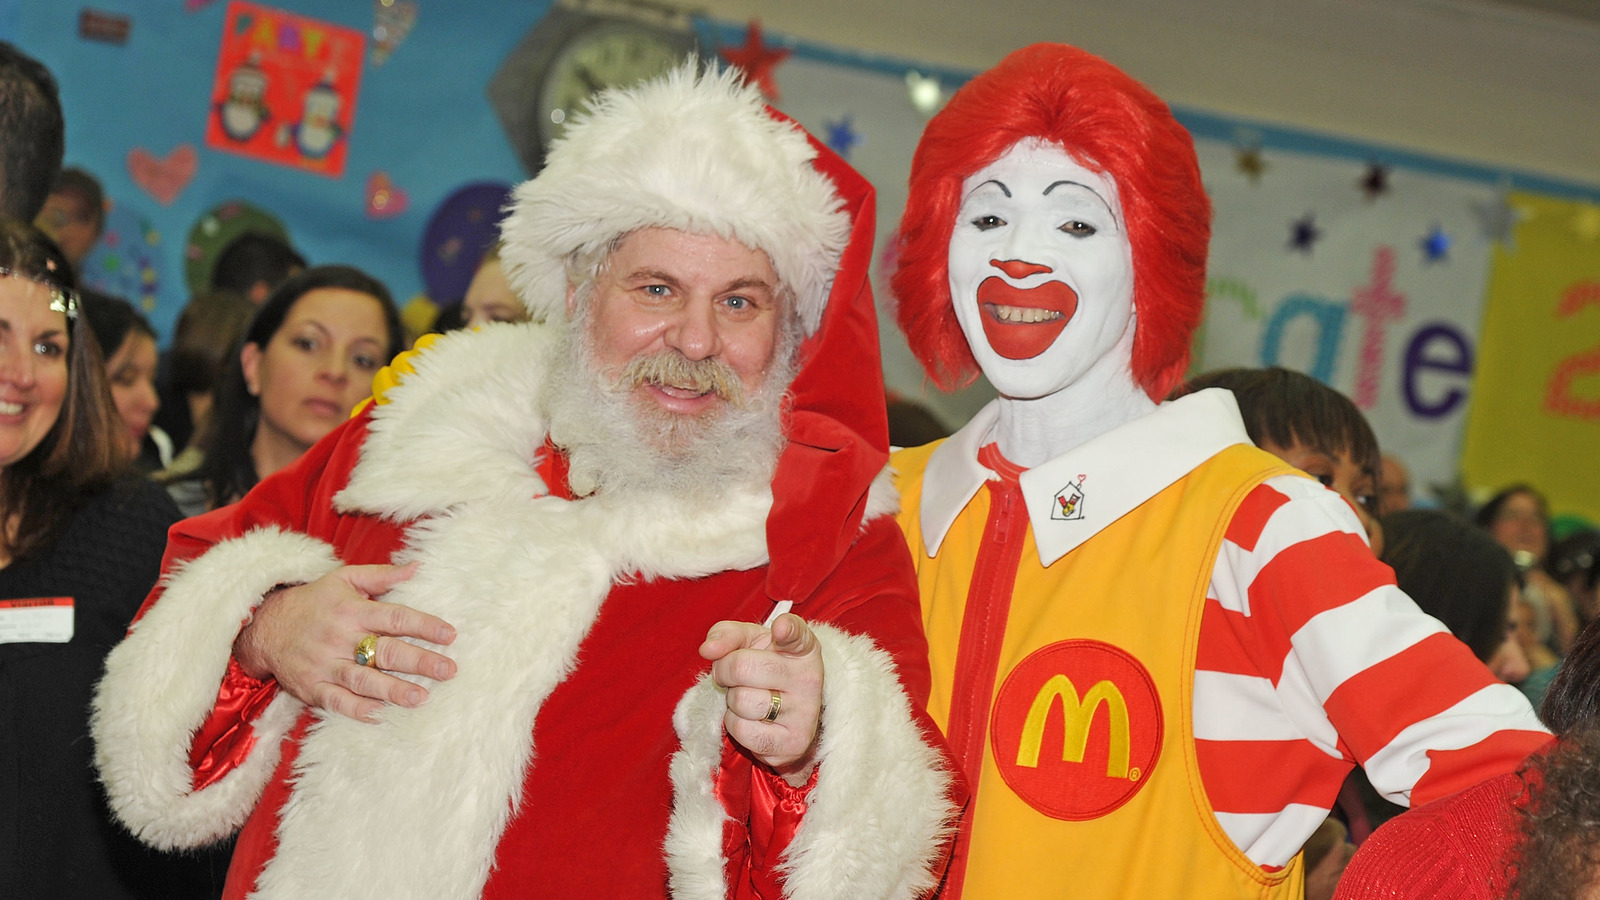 Is McDonald's Open On Christmas Day 2020?